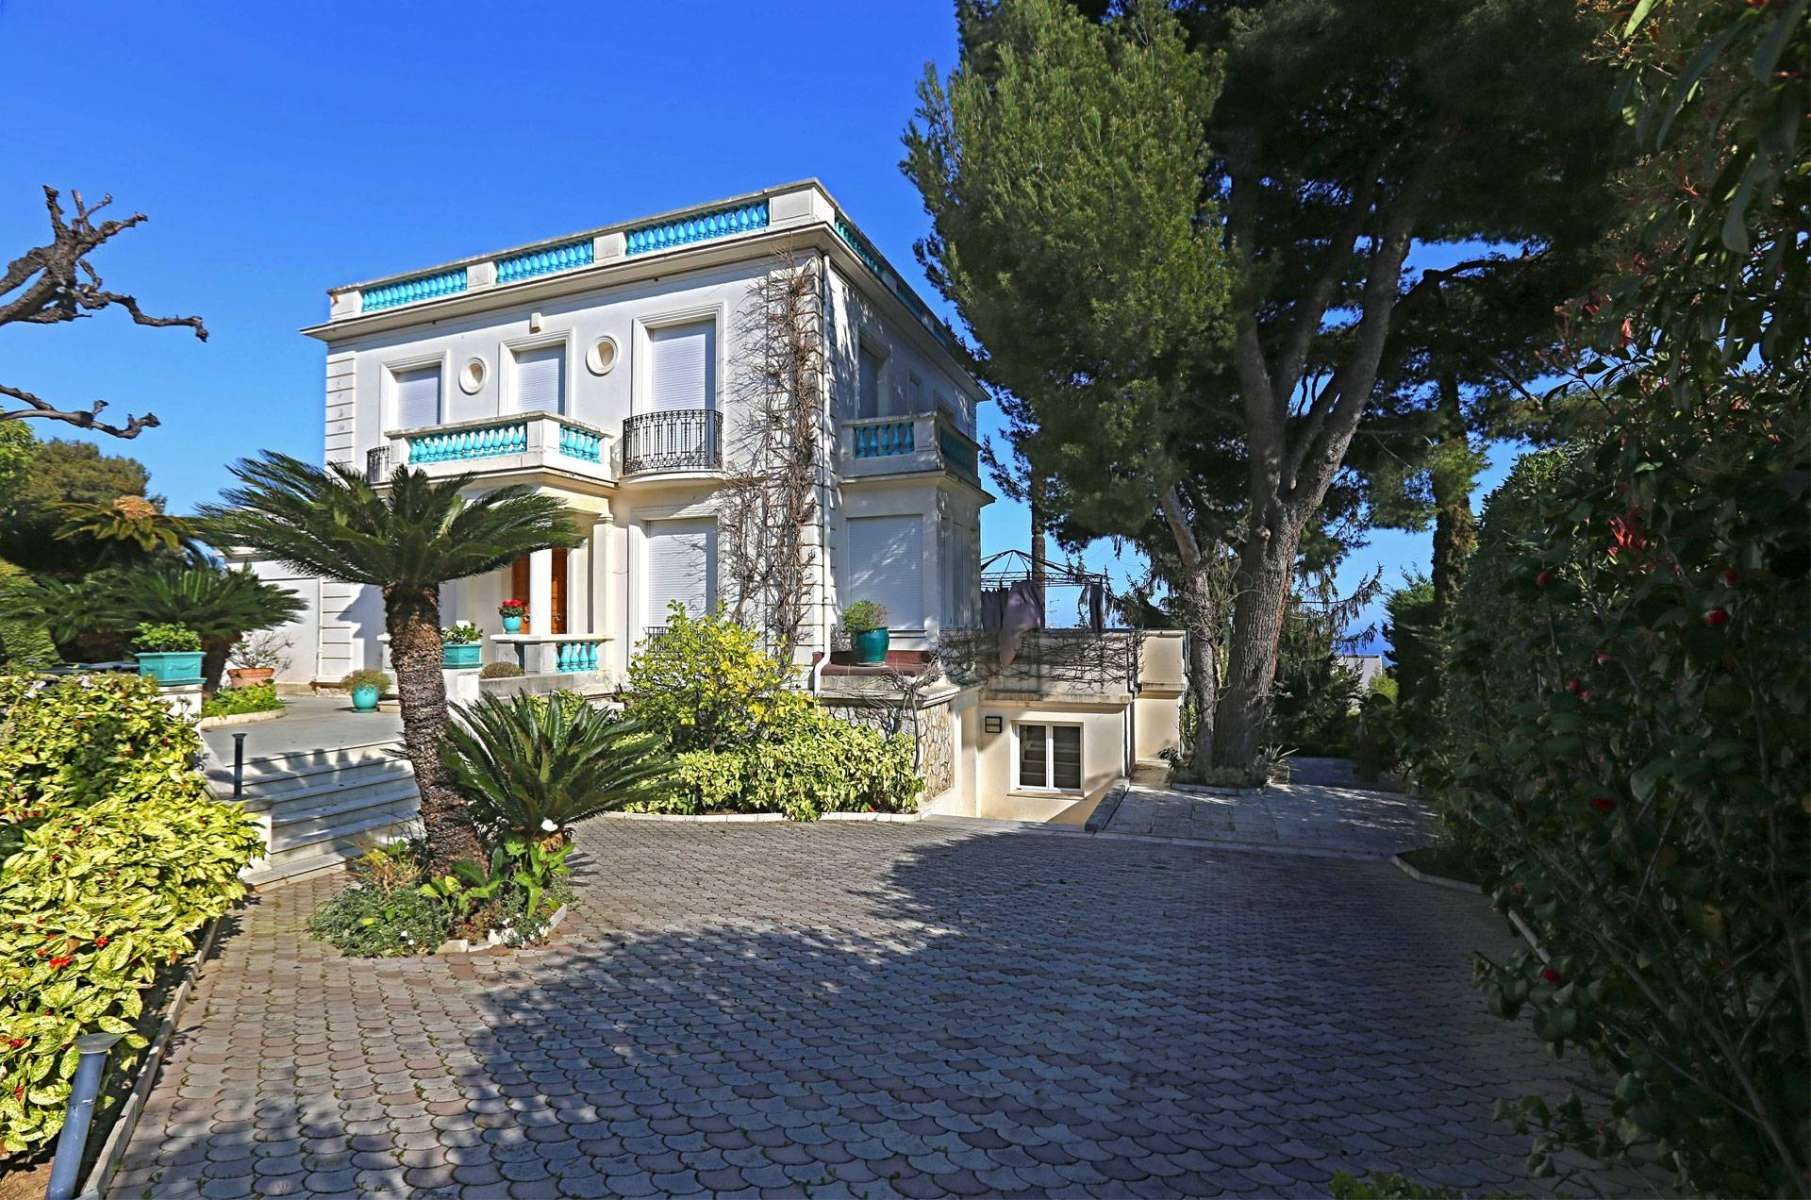 Property for sale in prestigious area of Nice